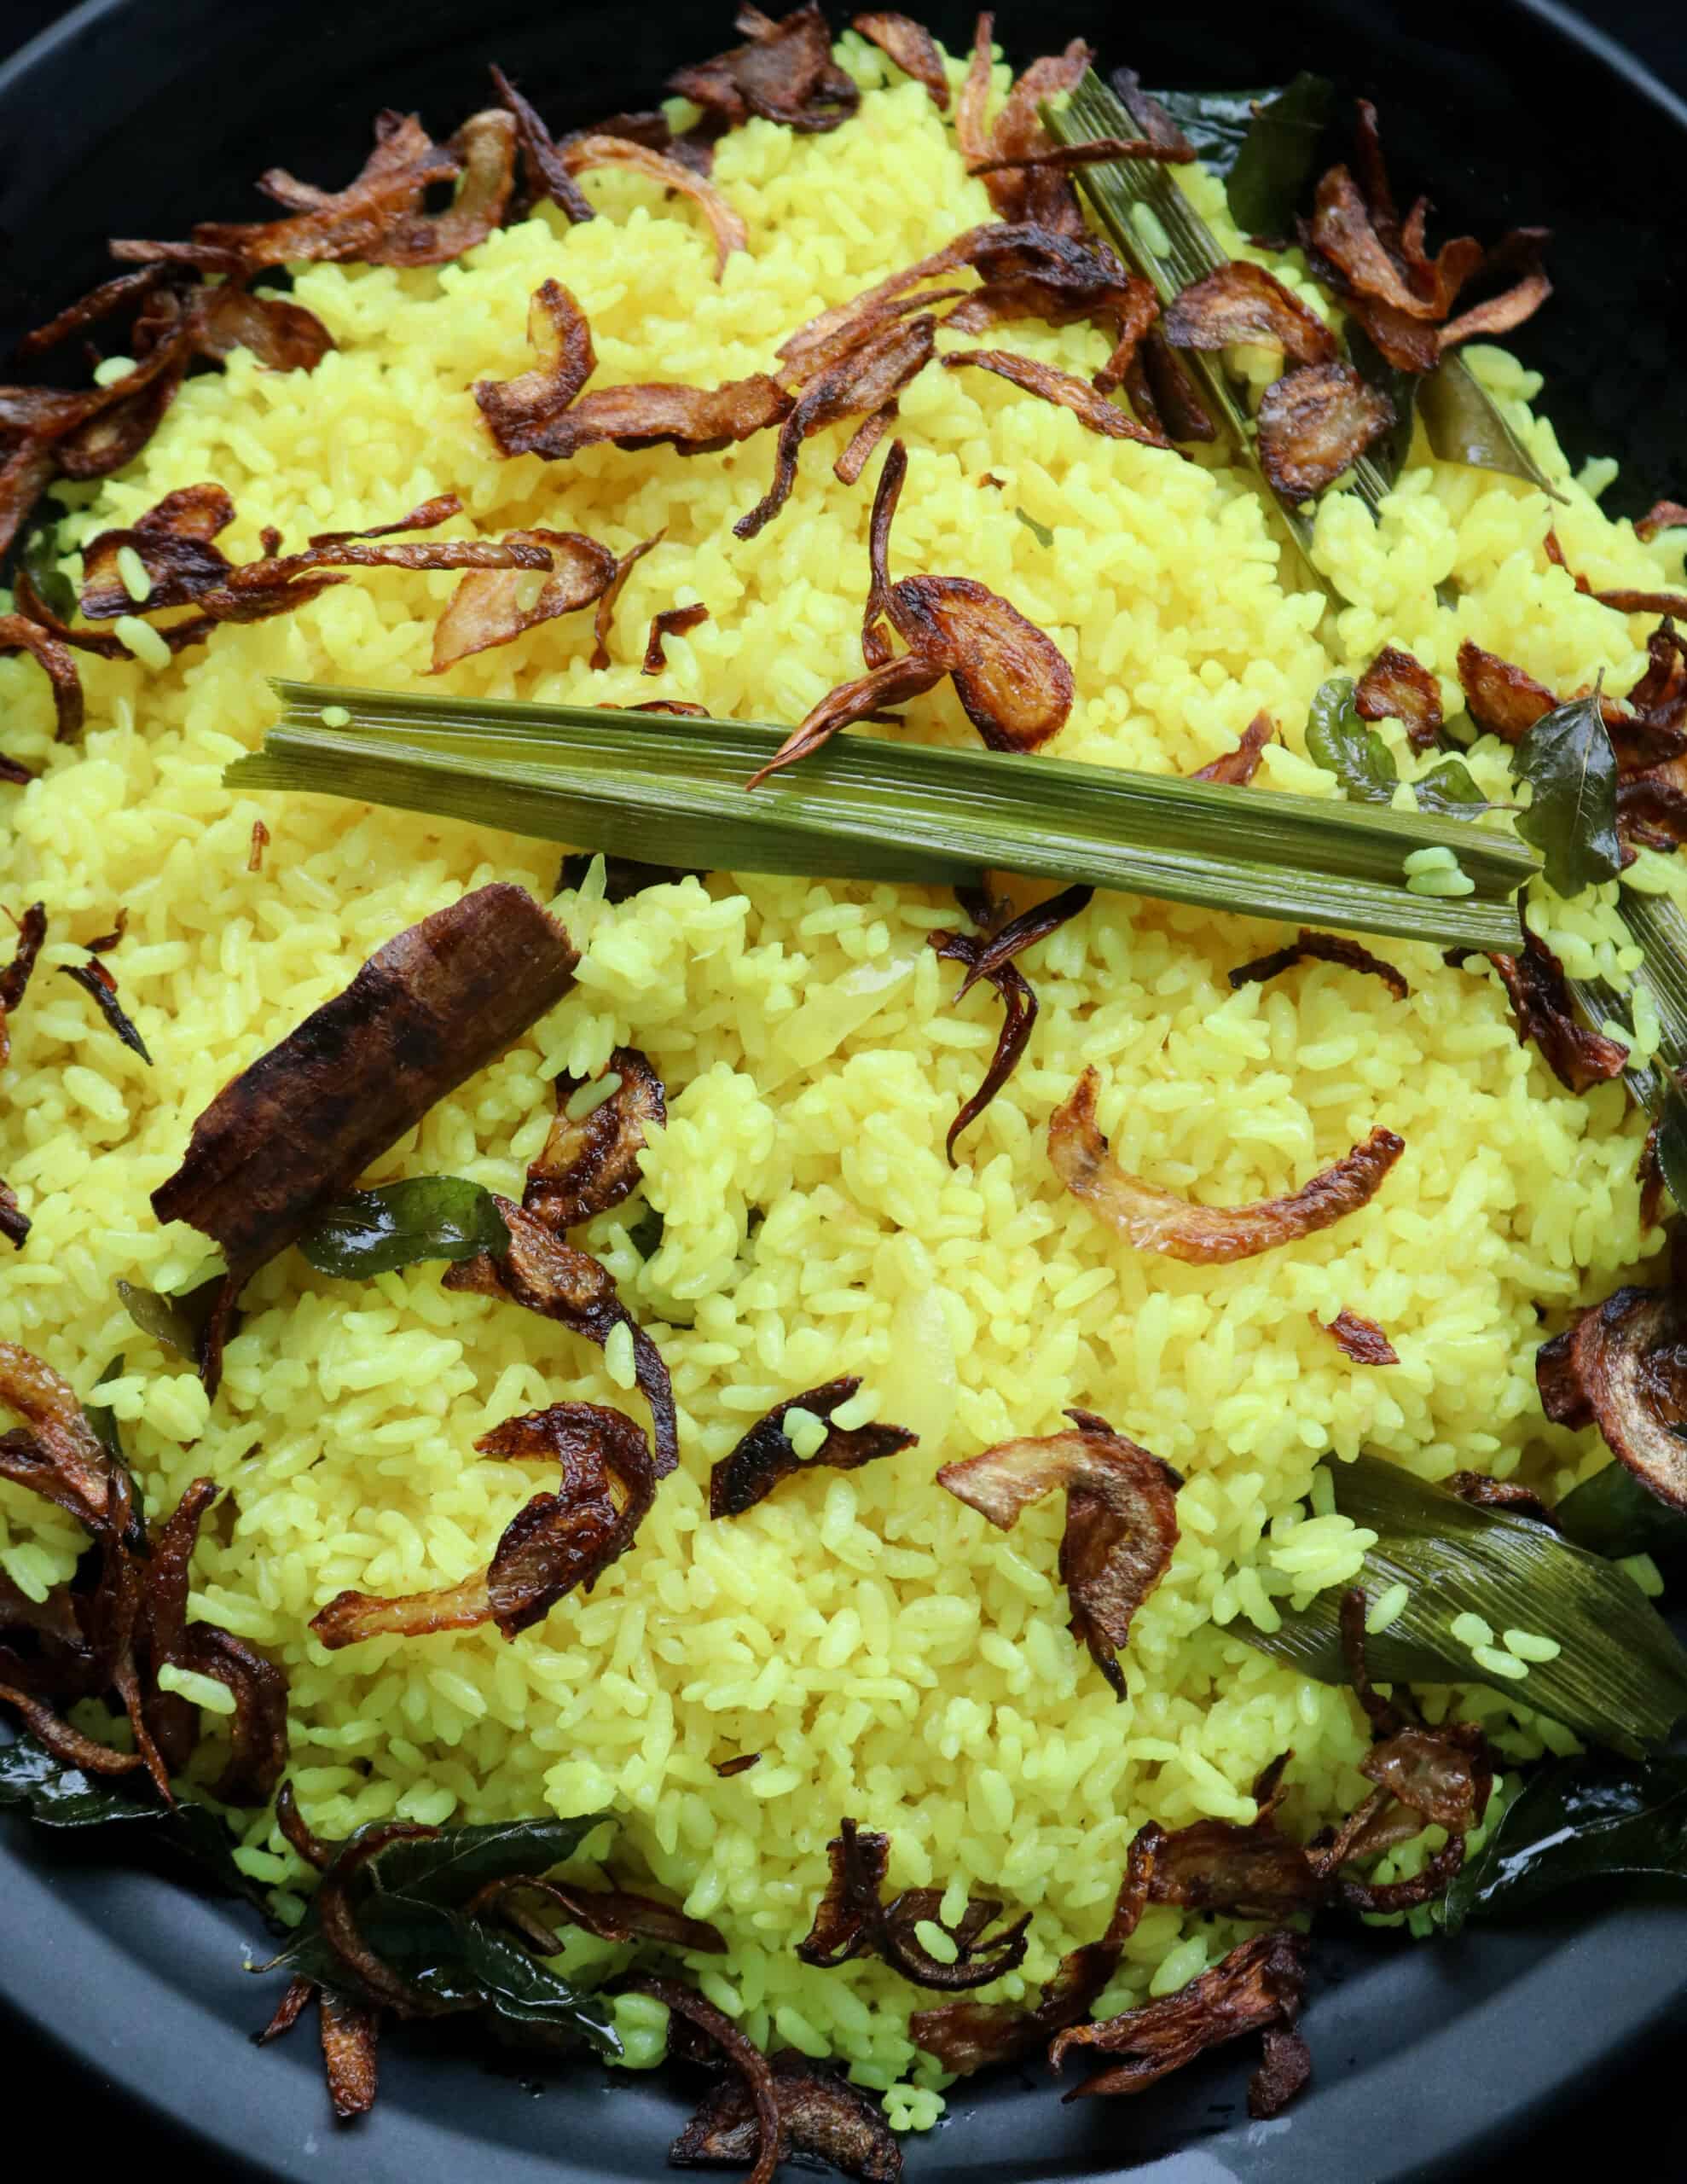 Sri lankan yellow rice or turmeric rice served on a plate